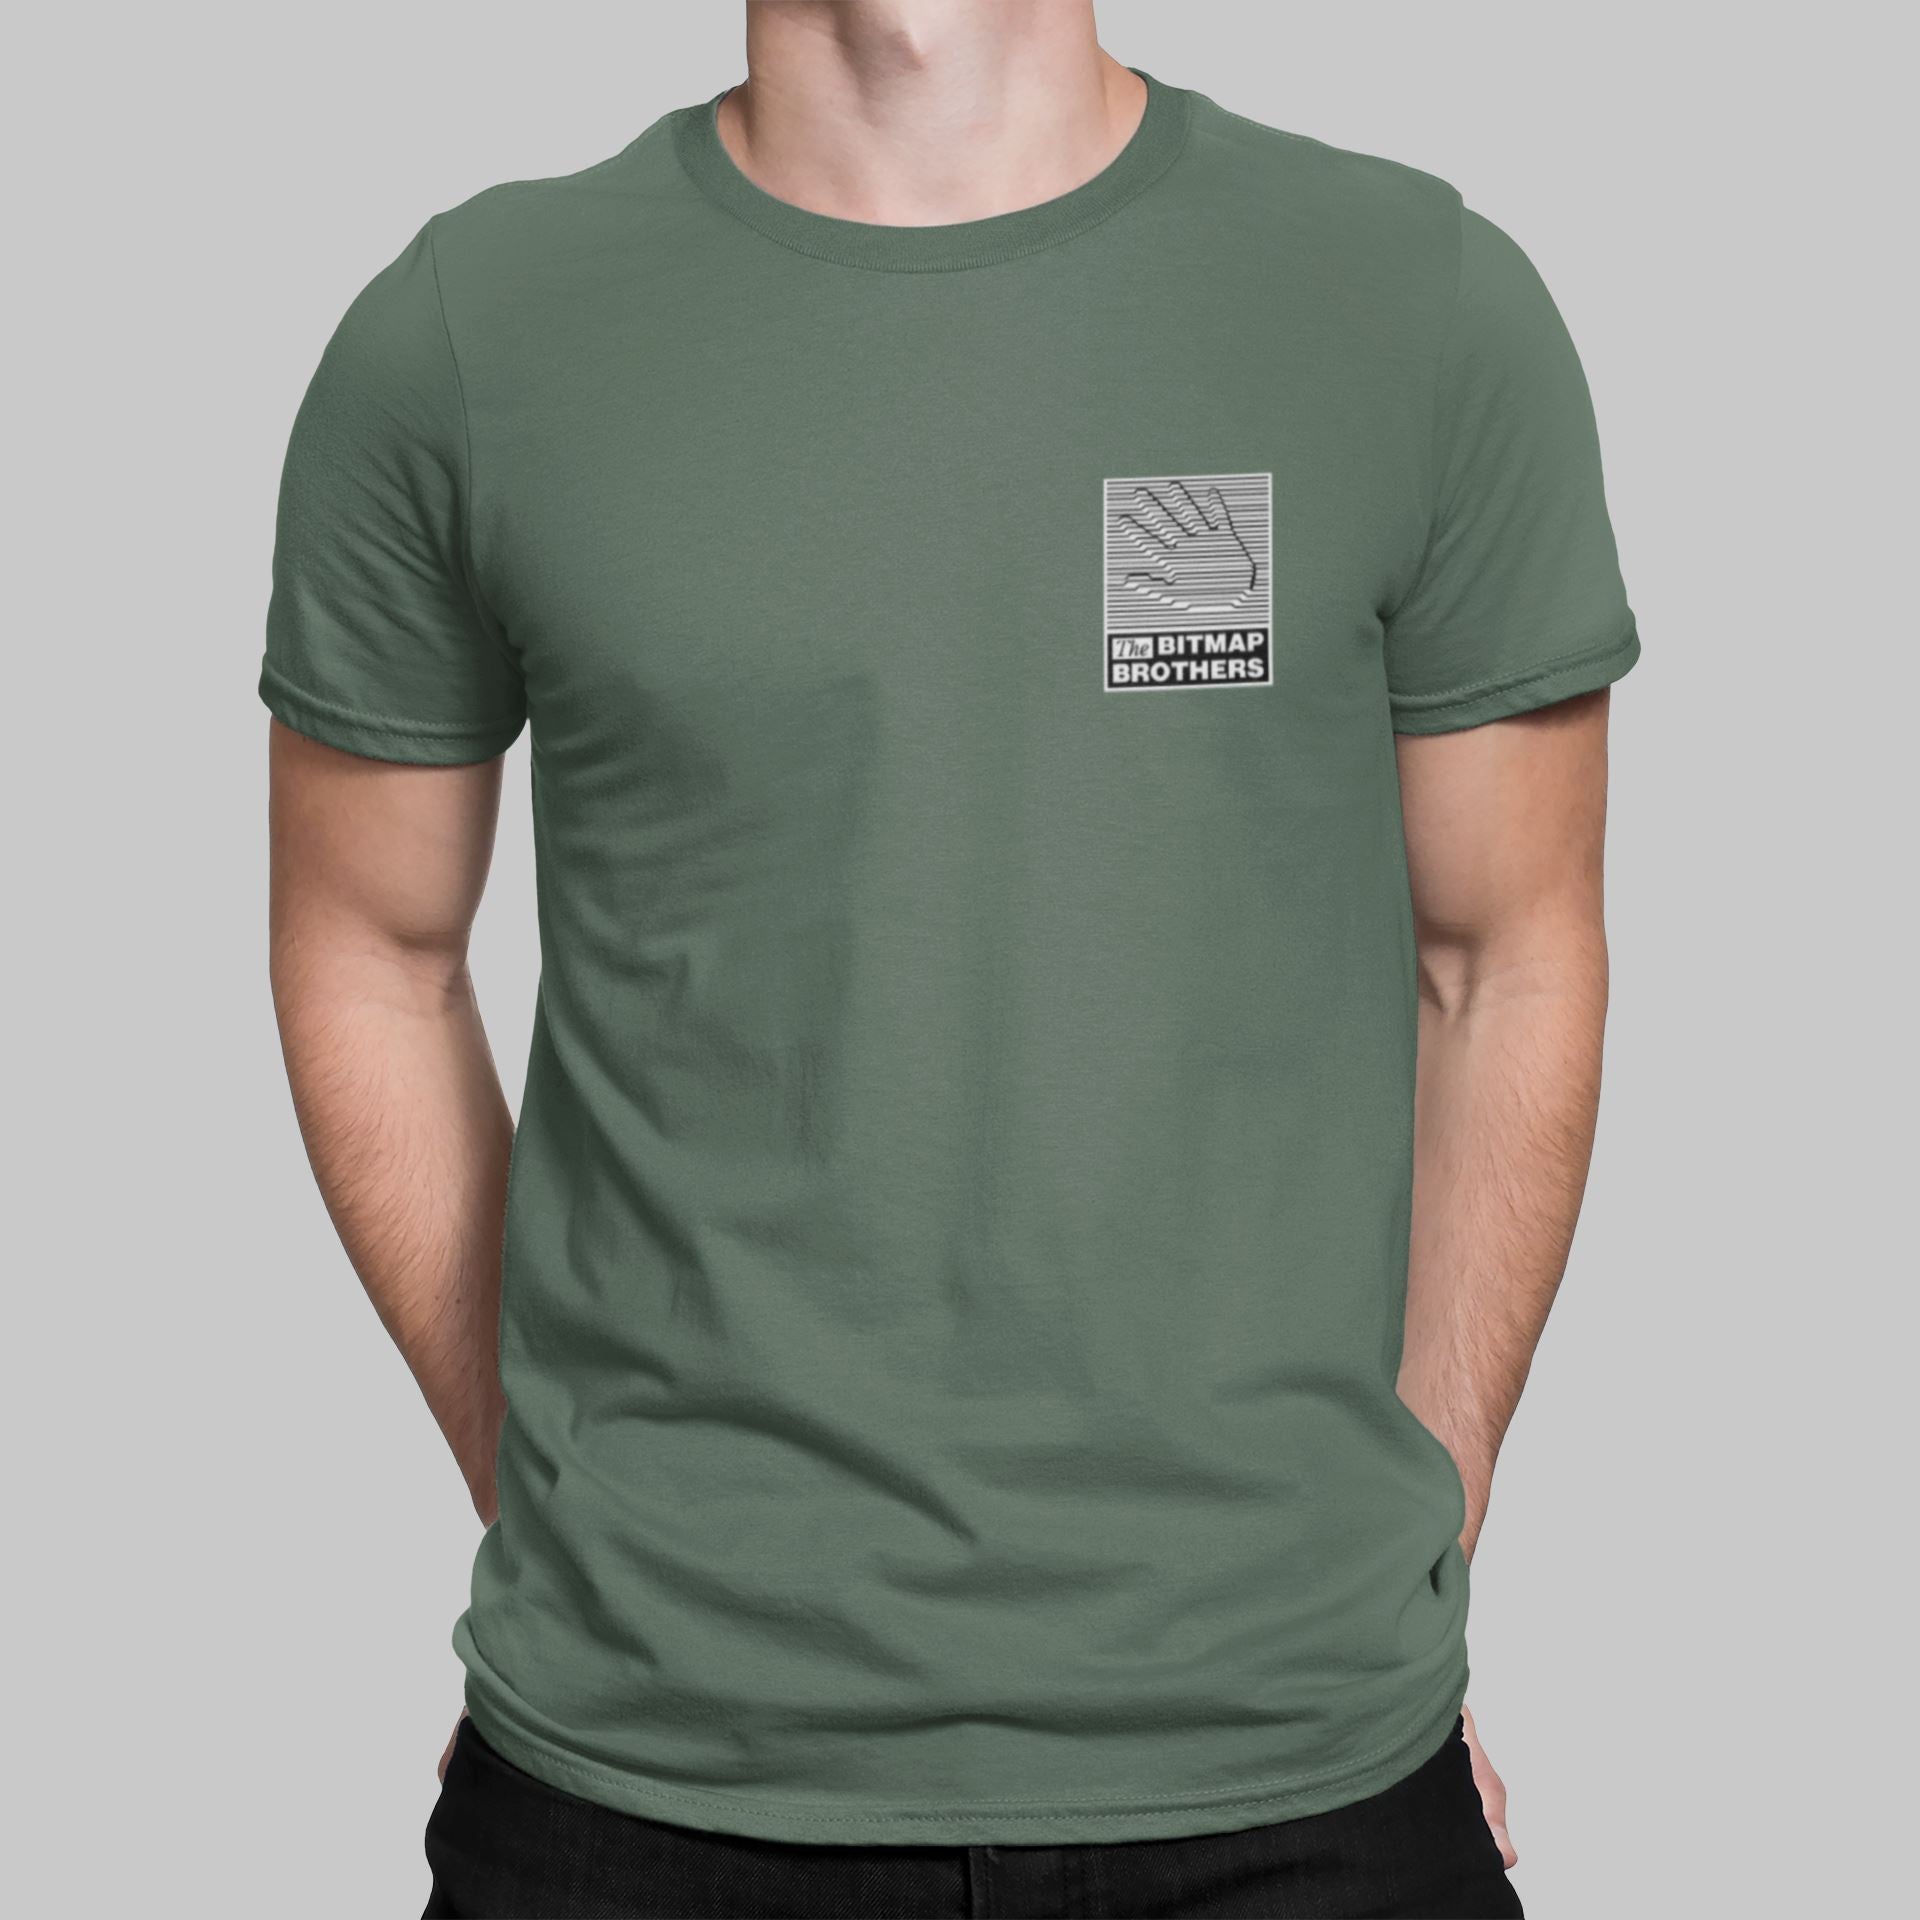 Bitmap Brothers Pocket Print Retro Gaming T-Shirt T-Shirt Seven Squared Small 34-36" Military Green 